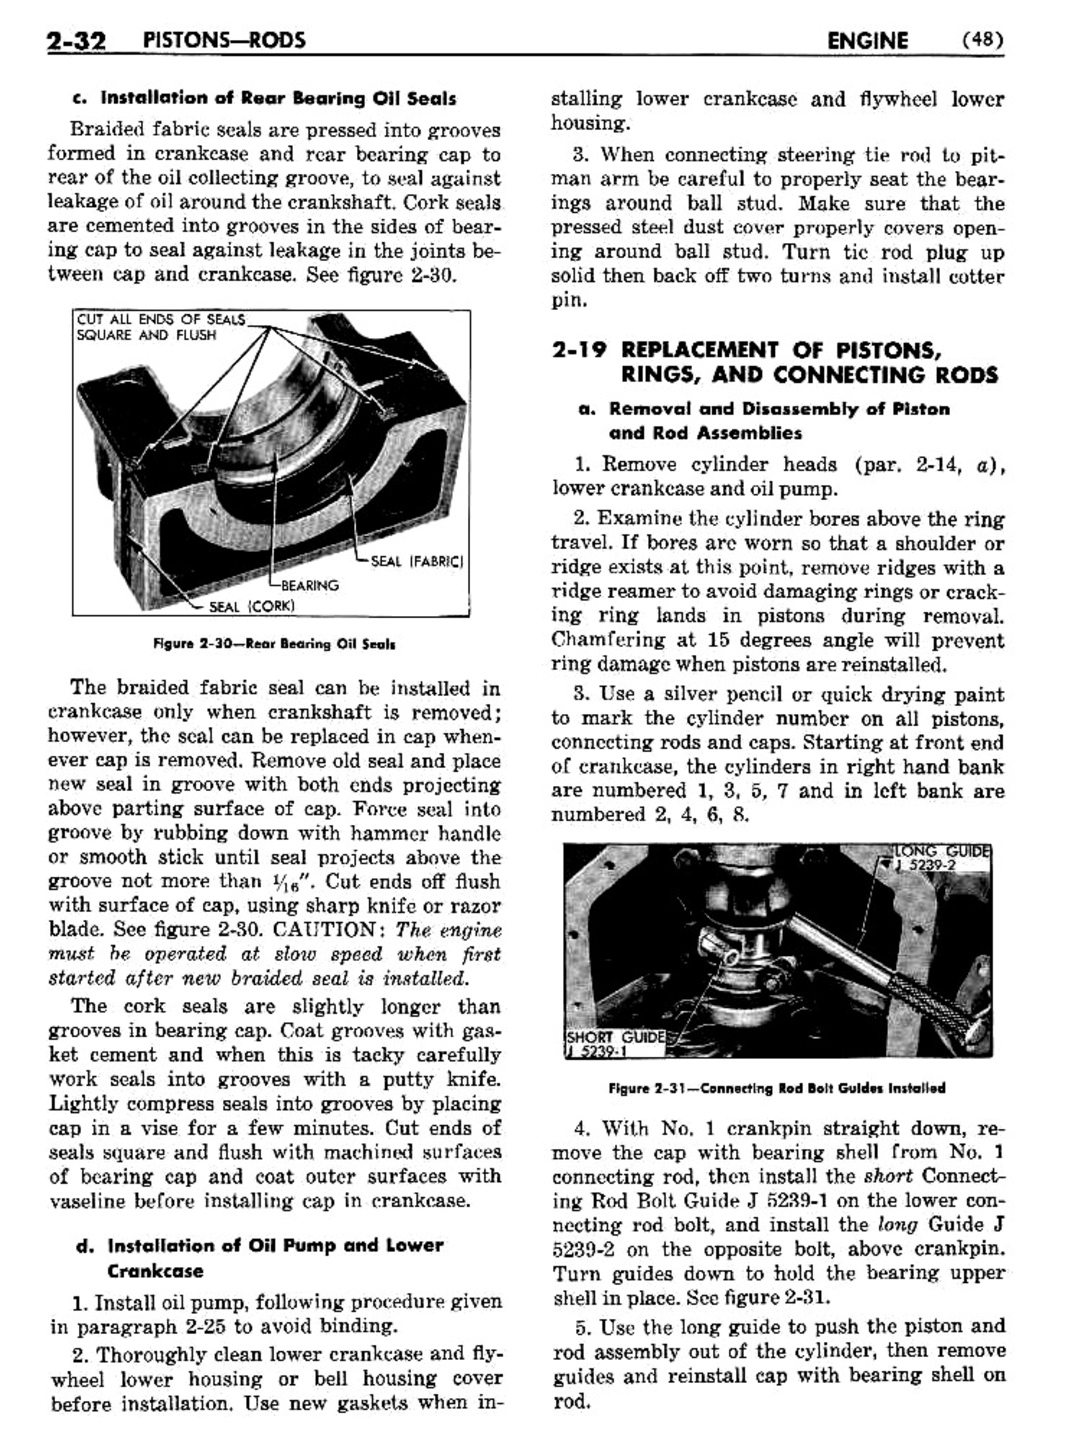 n_03 1954 Buick Shop Manual - Engine-032-032.jpg